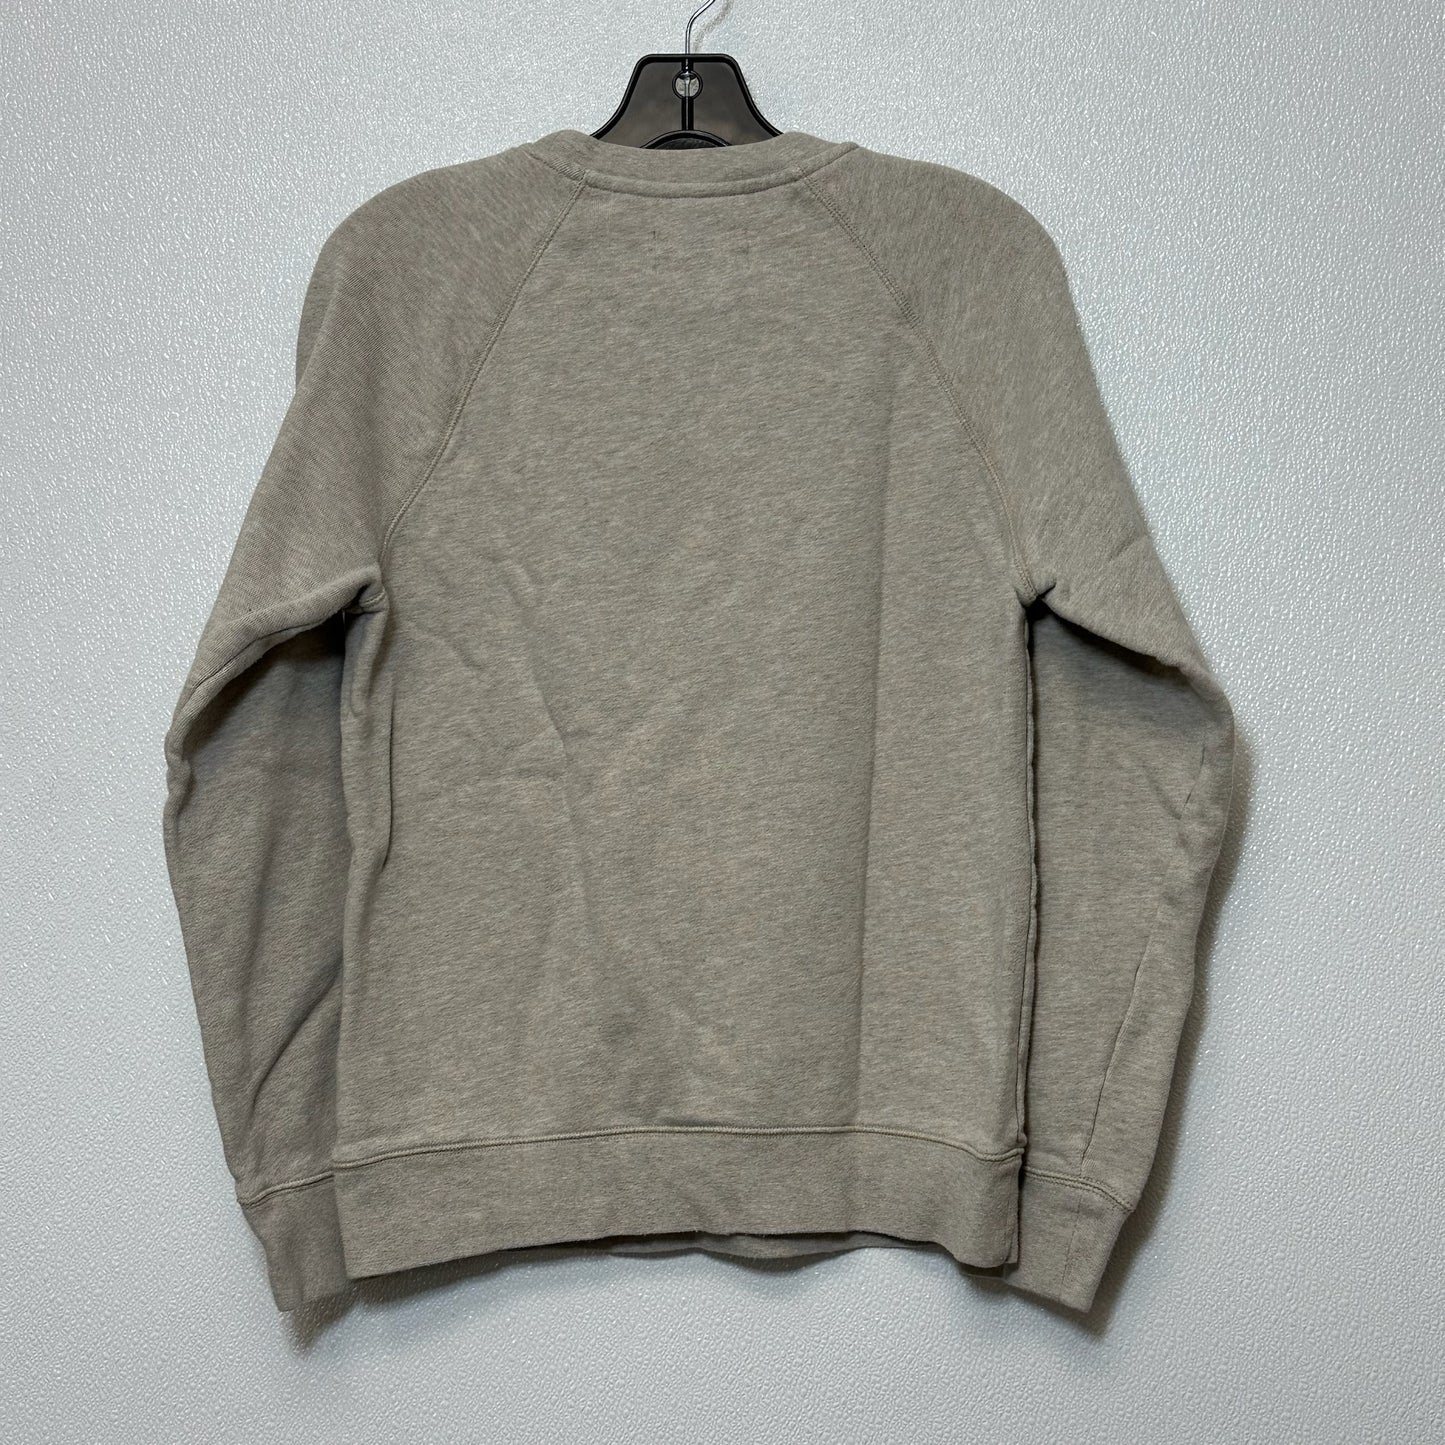 Sweatshirt Crewneck By Everlane  Size: S